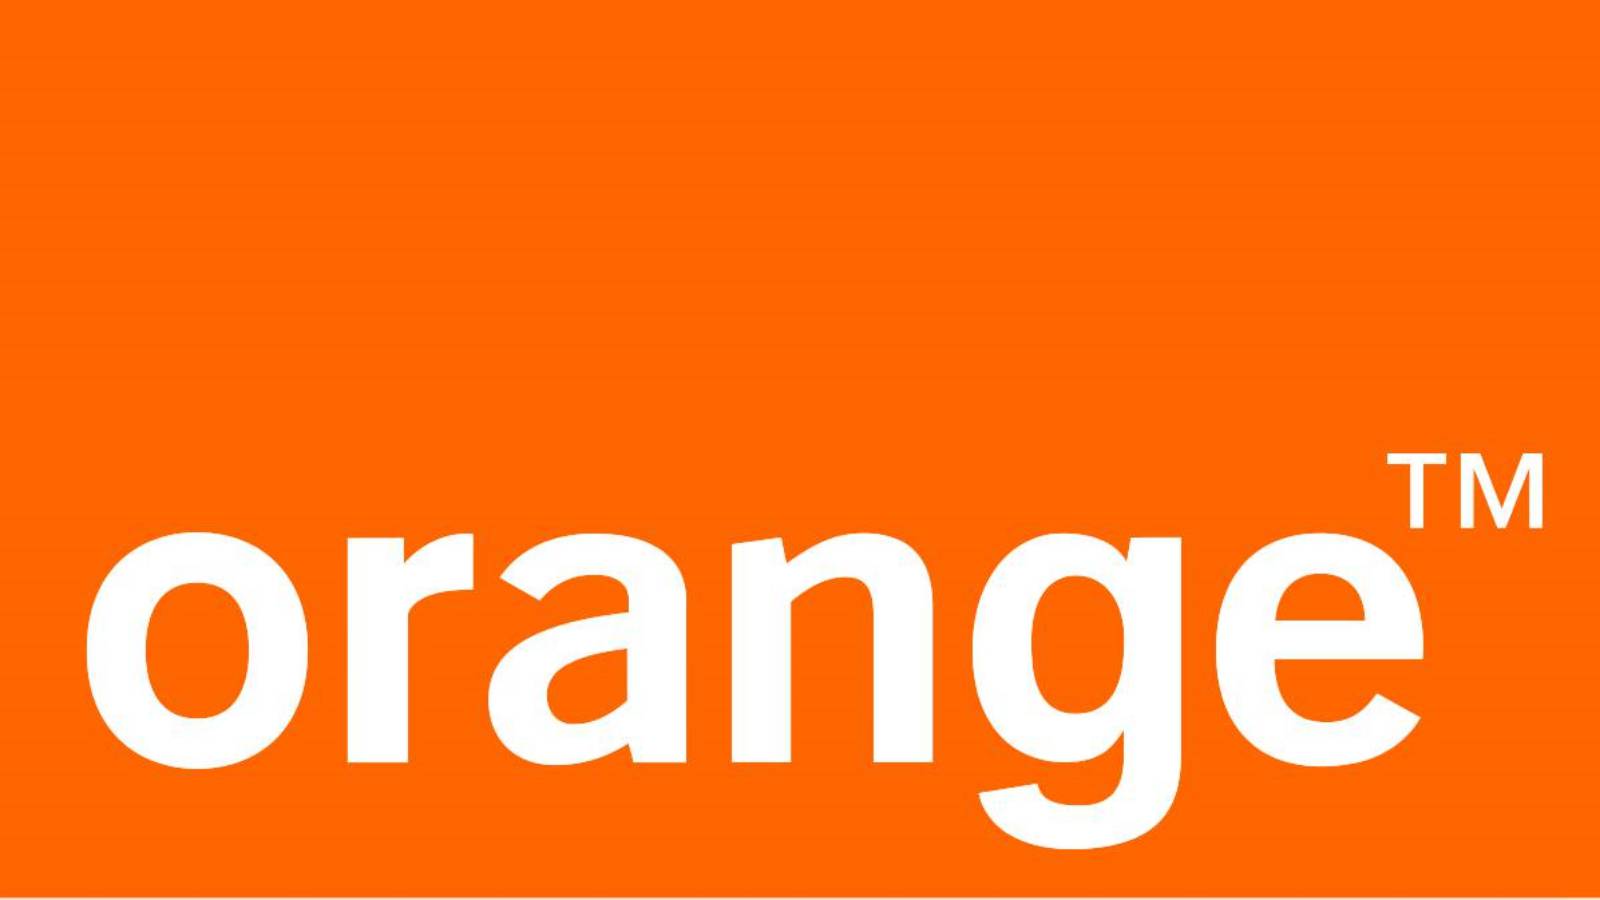 Pachetul Orange Beneficii SPECIALE Clientii Romania